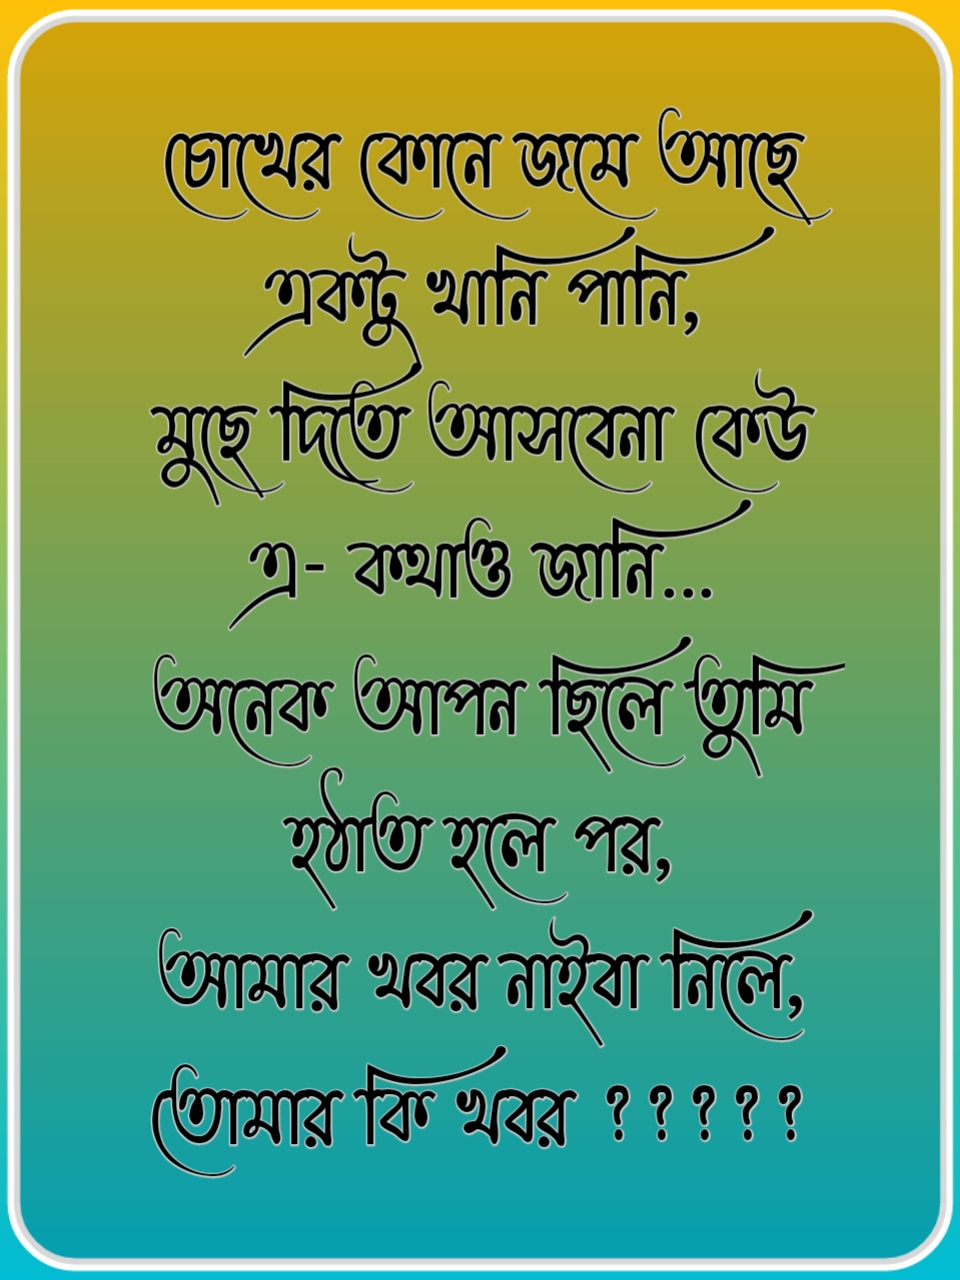 1. Bangla status love, Love caption, facebook caption, bangla chondo pic, প্রেমেরে ছন্দ, ভালোবাসার ছন্দ, ছন্দ পিক, ছন্দ লেখা ছবি